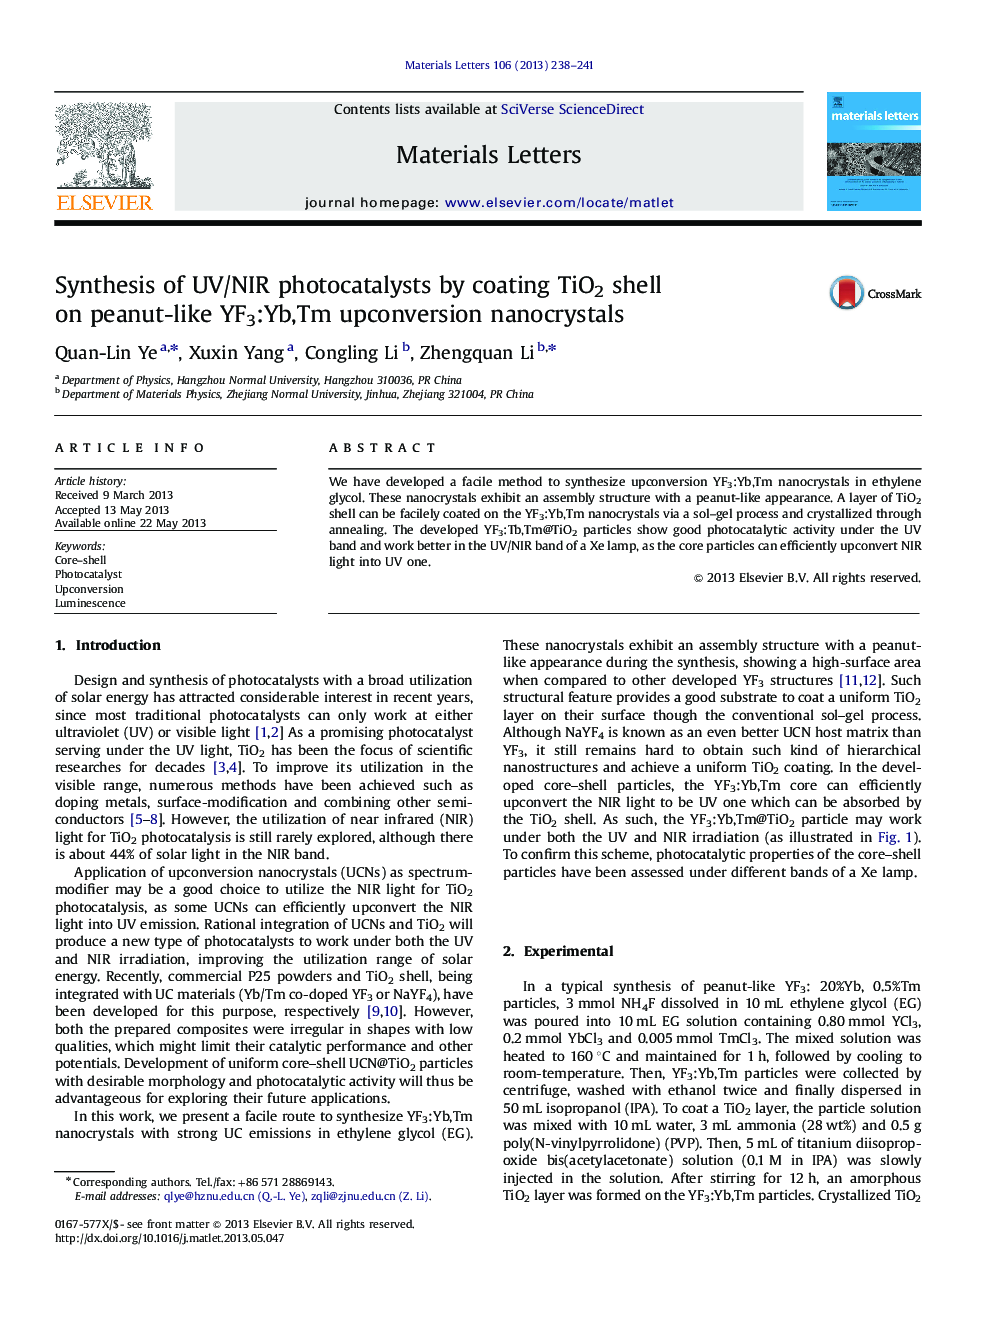 Synthesis of UV/NIR photocatalysts by coating TiO2 shell on peanut-like YF3:Yb,Tm upconversion nanocrystals